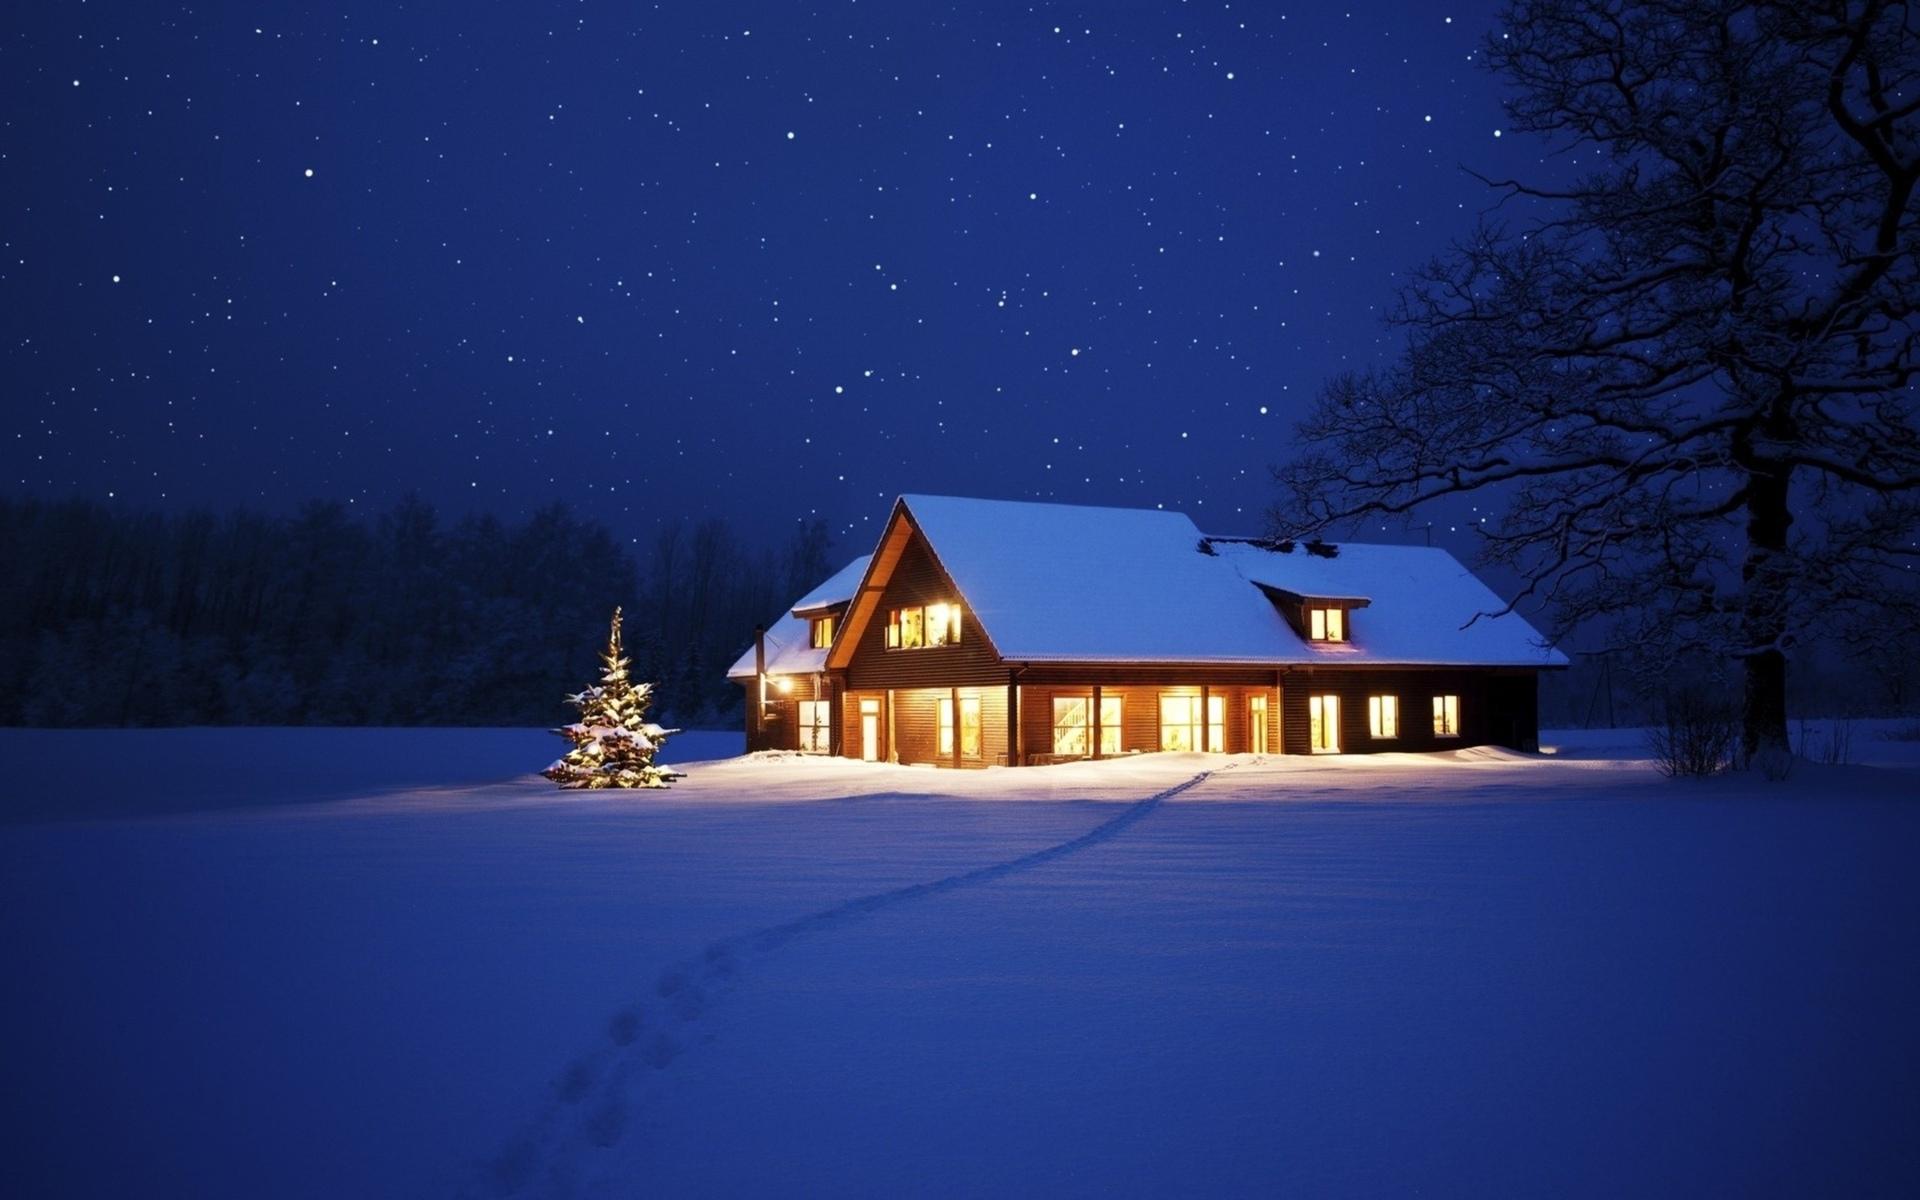 Holidays christmas seasonal winter snow night lights seasons